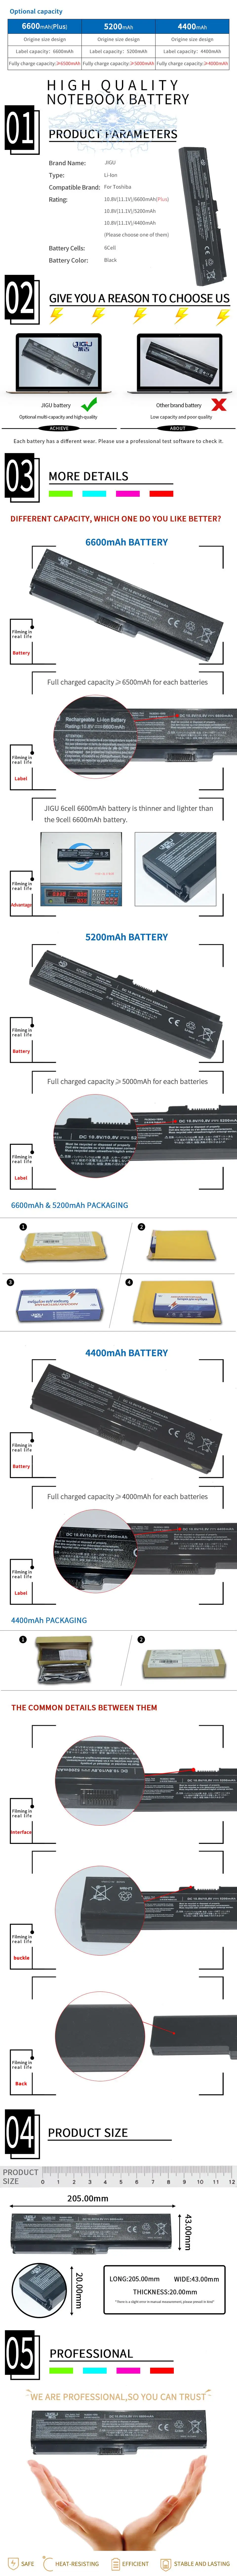 Аккумулятор для ноутбукаToshiba C650 A655 A660 A665 C600 C640 C645 C650 C655D C655 C660 C665 C670 L310 L510 L515 L600 L630 L635 L640 L645 L650 L655 L670 L675D M300 M305